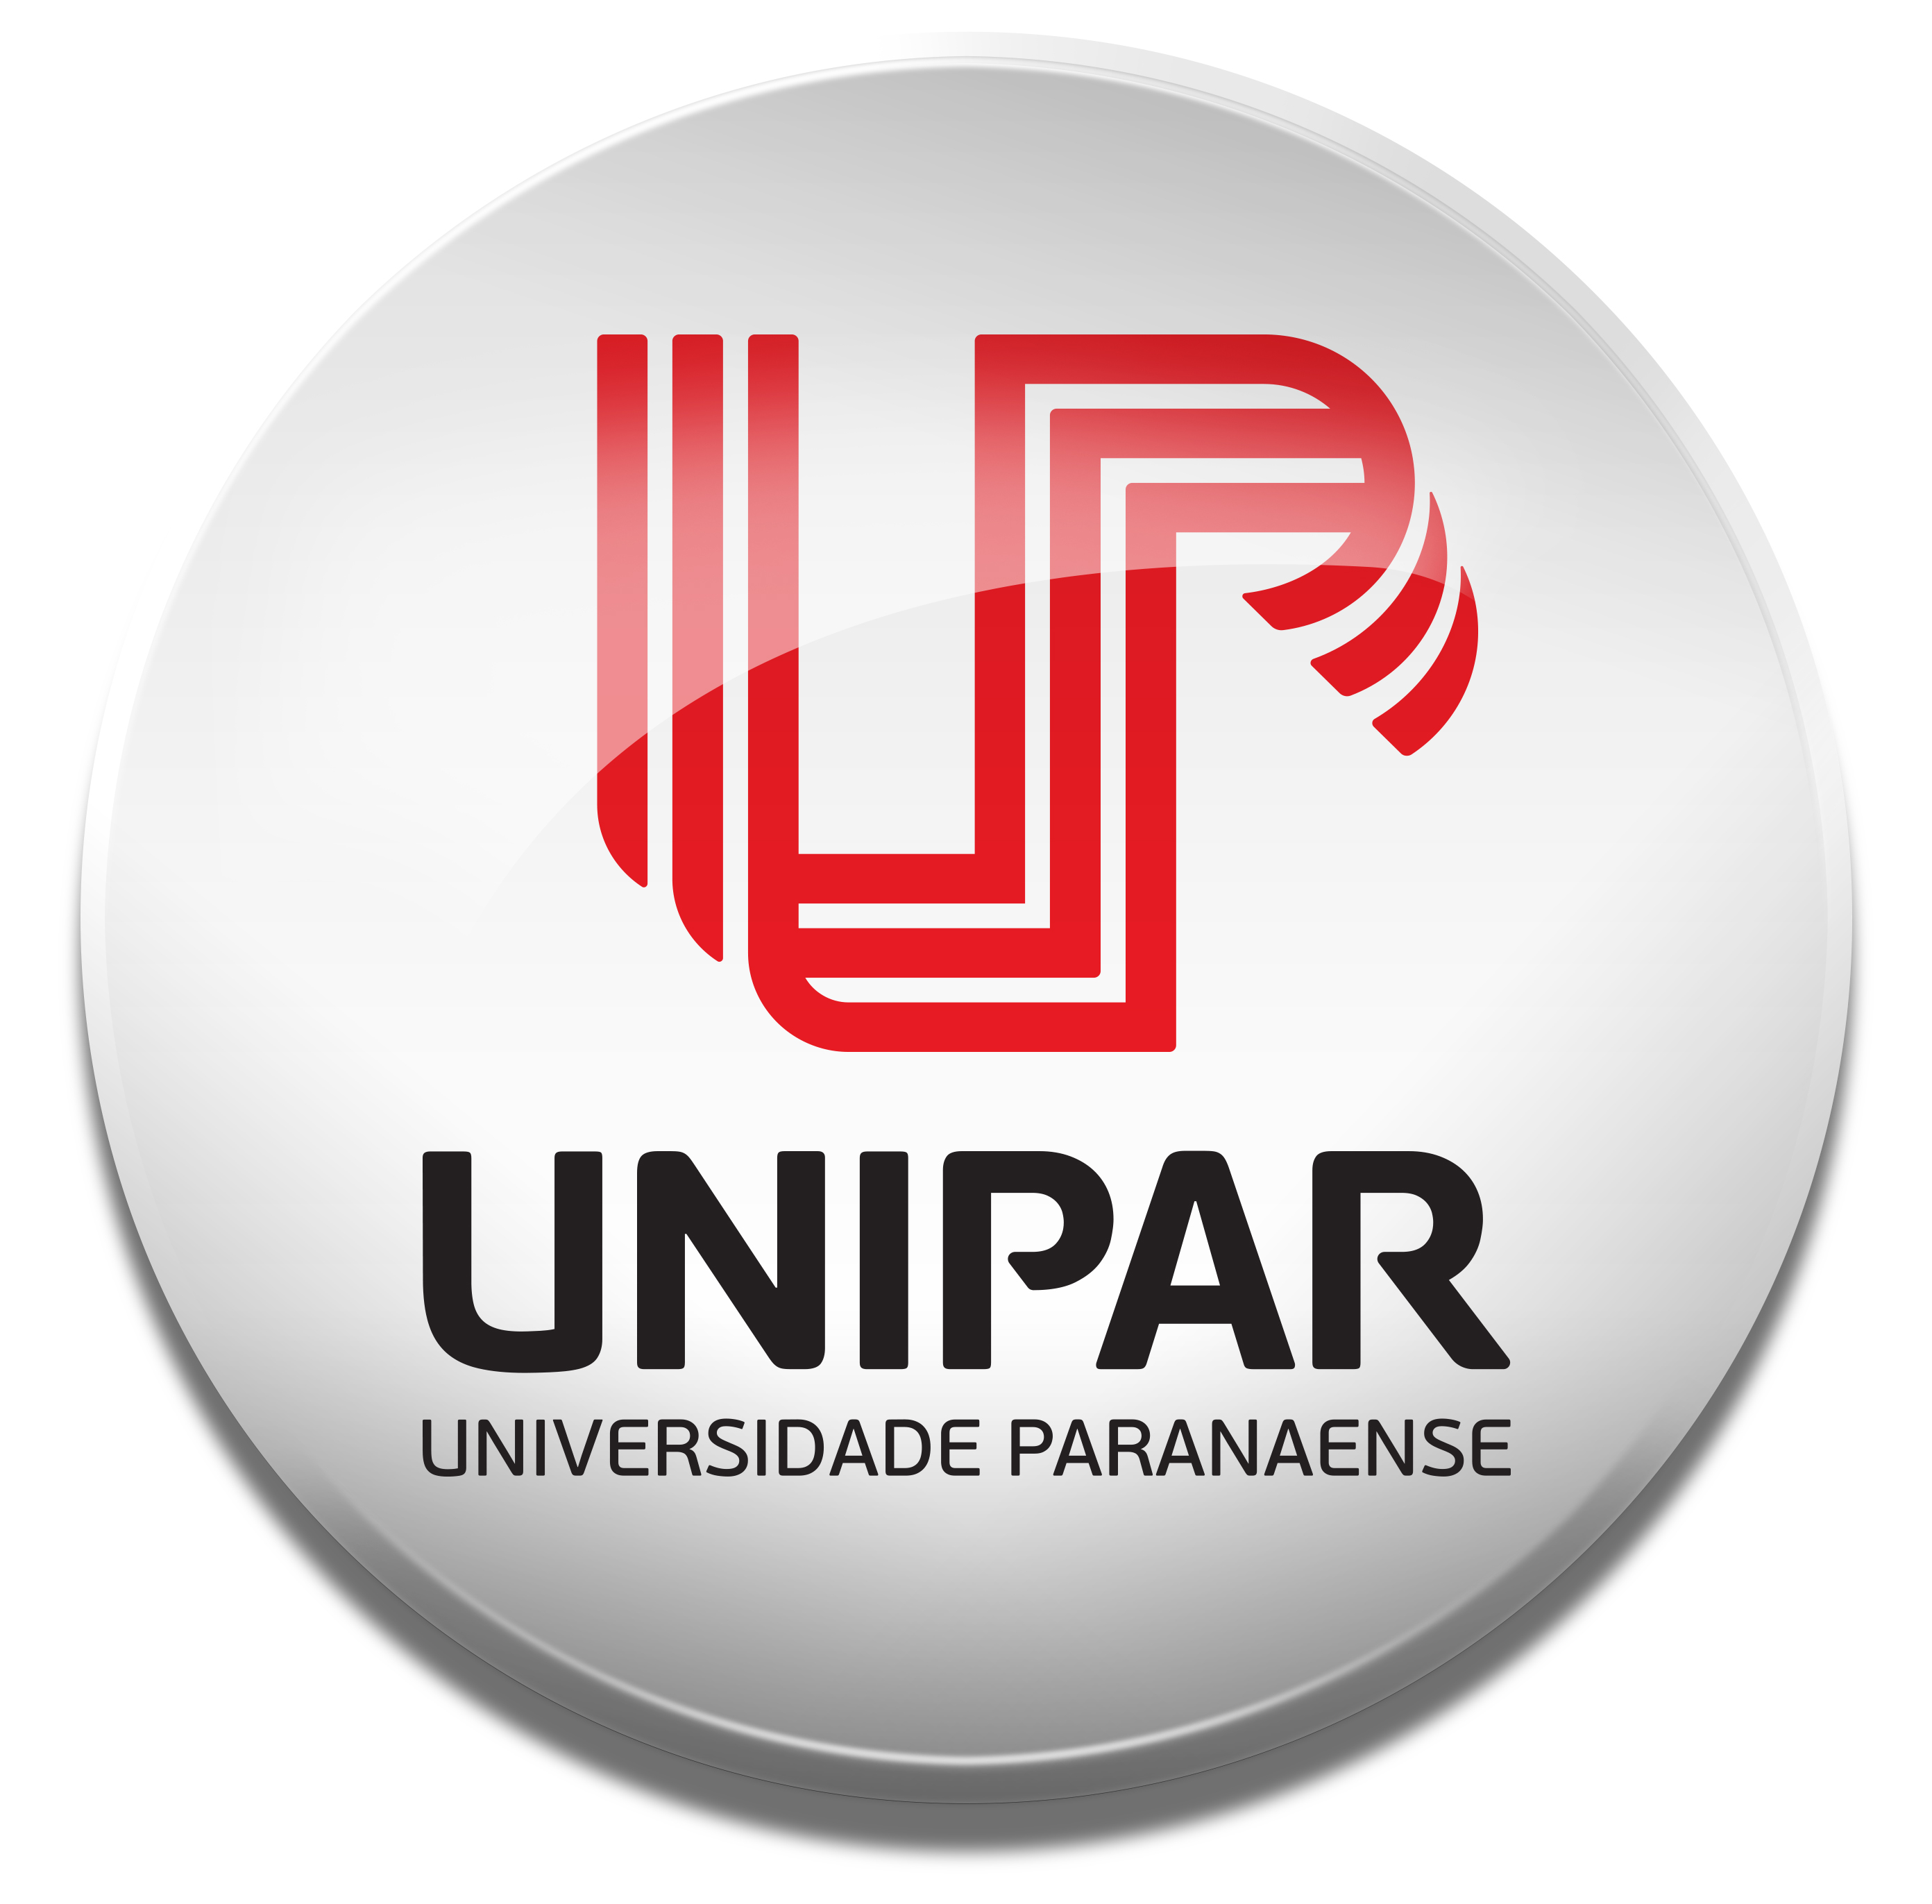 Universidade Paranaense logo